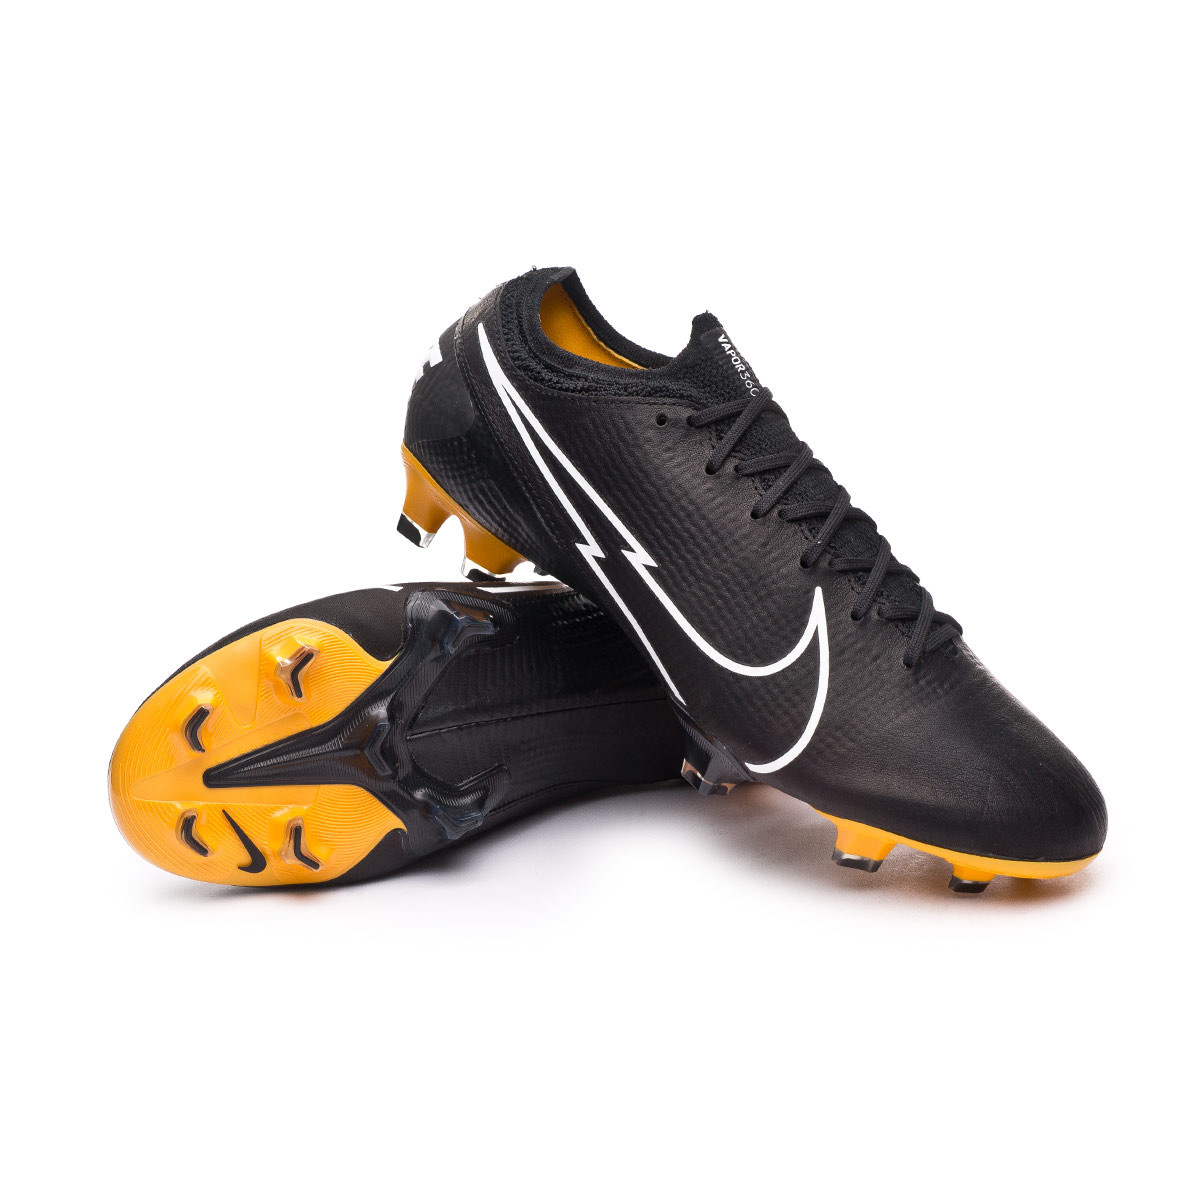 Football Boots Nike Vapor 13 Elite Tech 